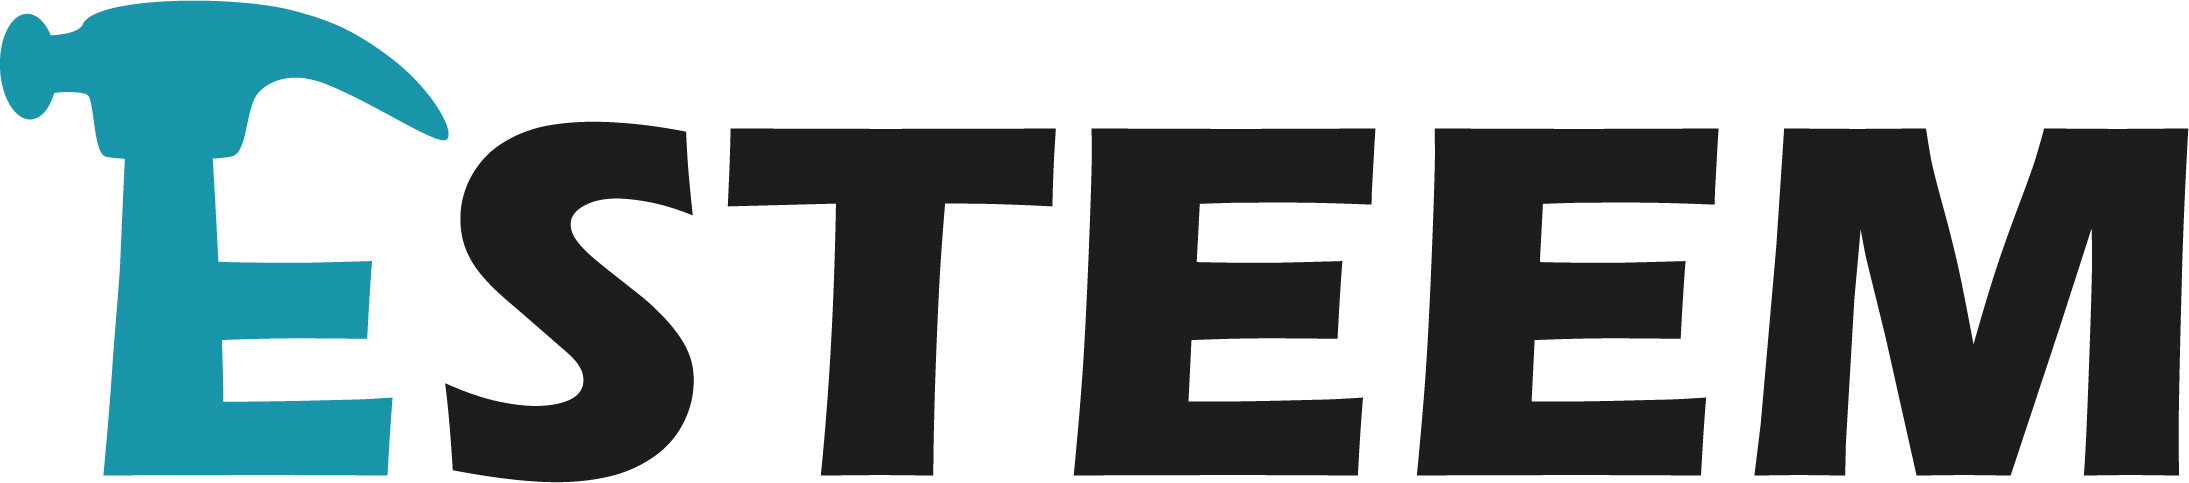 logo for Esteem Training Limited